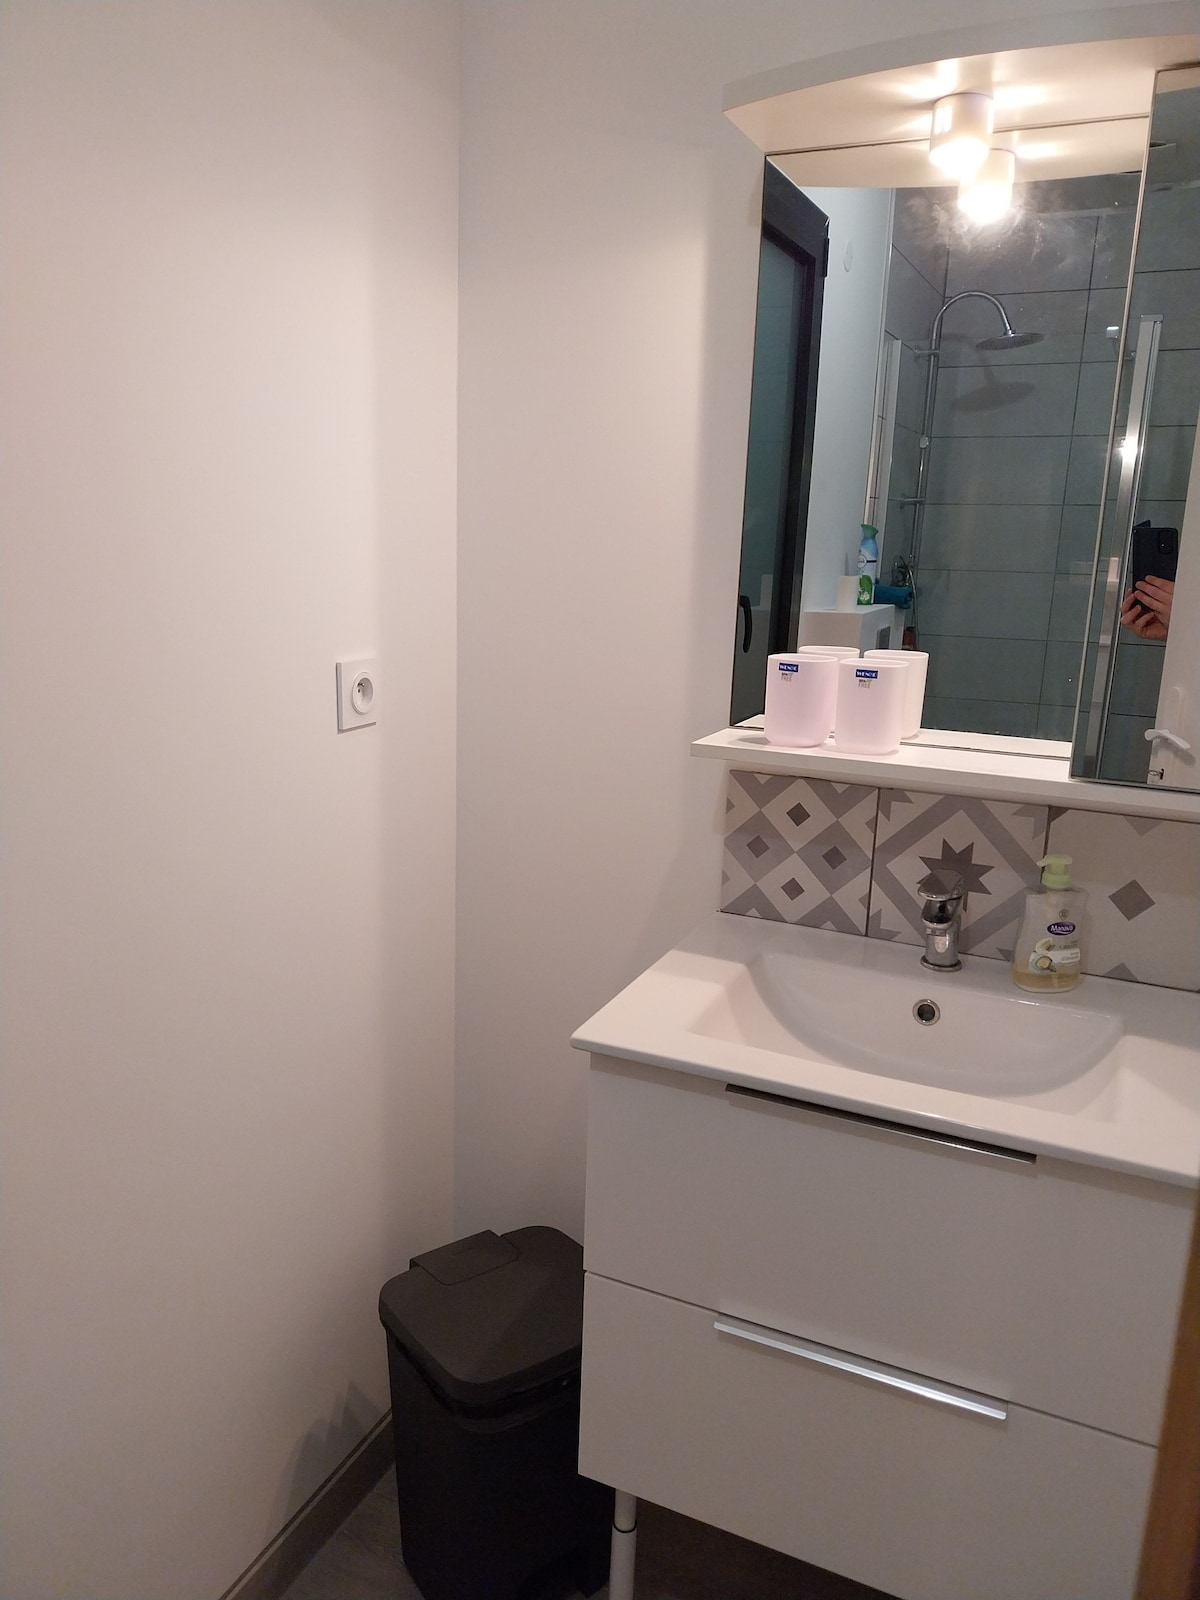 Studio neuf avec salle de bain